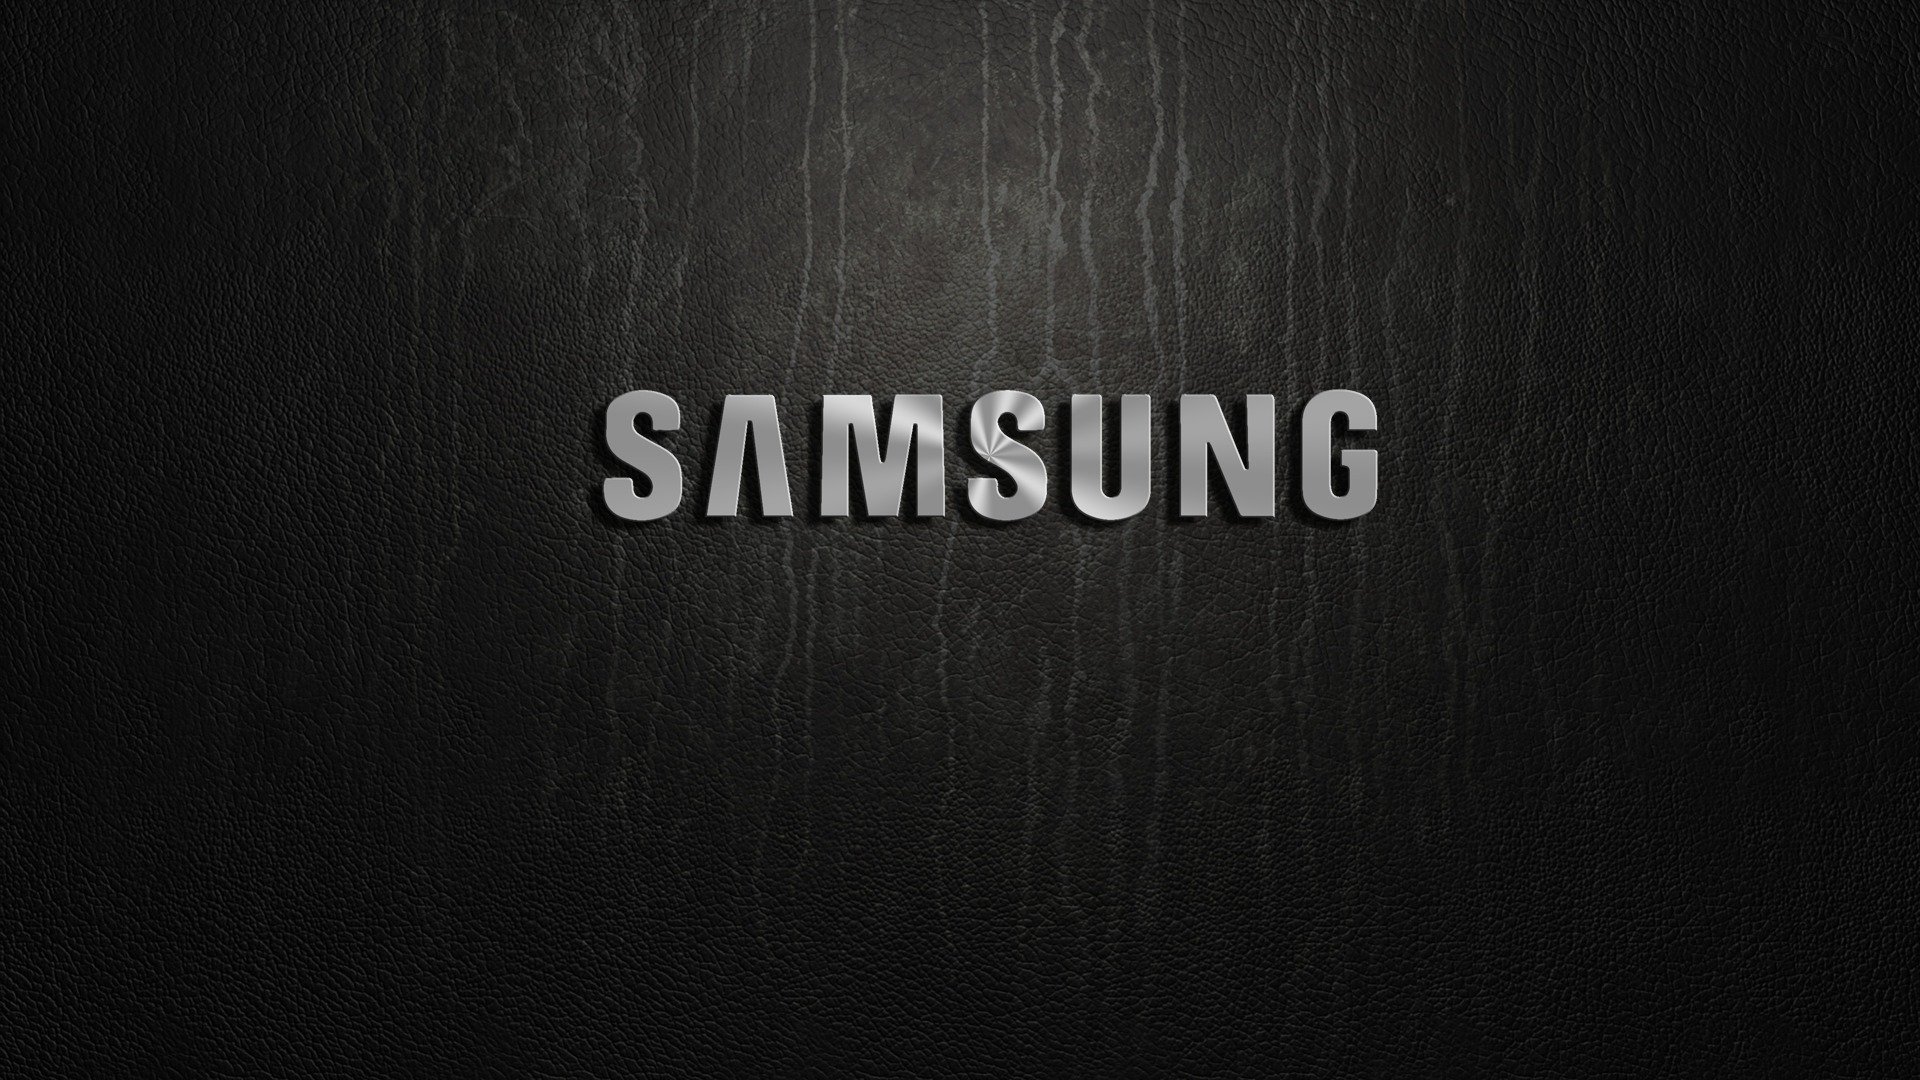 Картинки самсунг. Логотип Samsung Galaxy Note 8. Samsung логотип 2021. Обои Samsung. Samsung заставка.